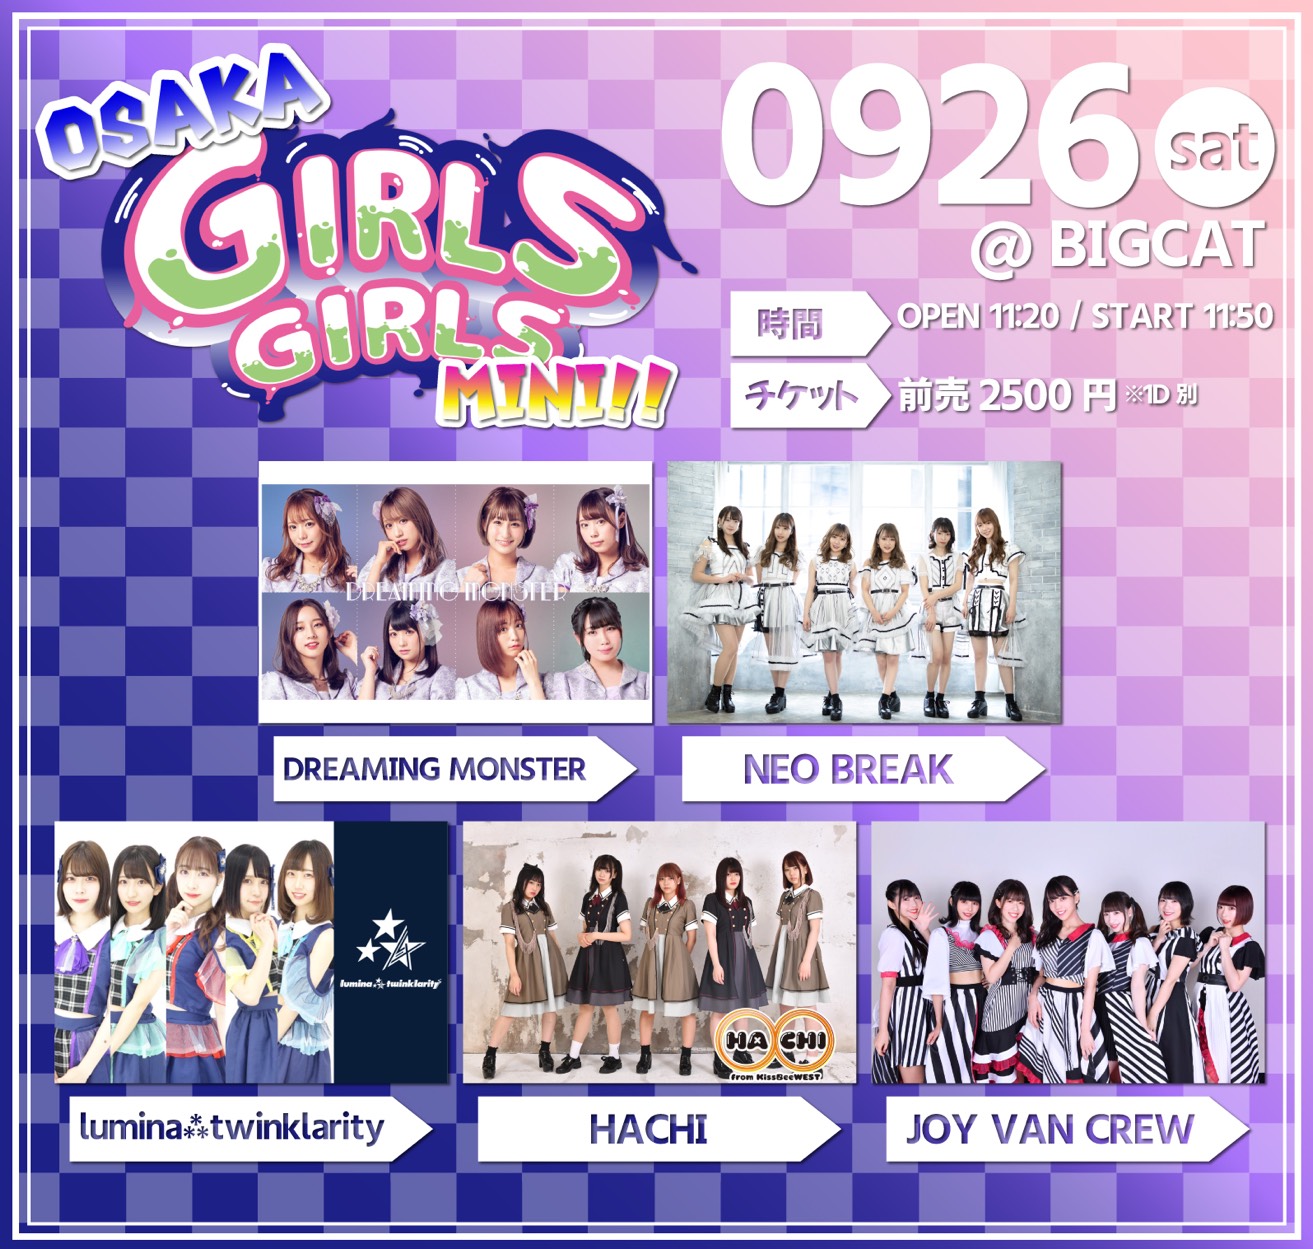 OSAKA GIRLS GIRLS mini!!